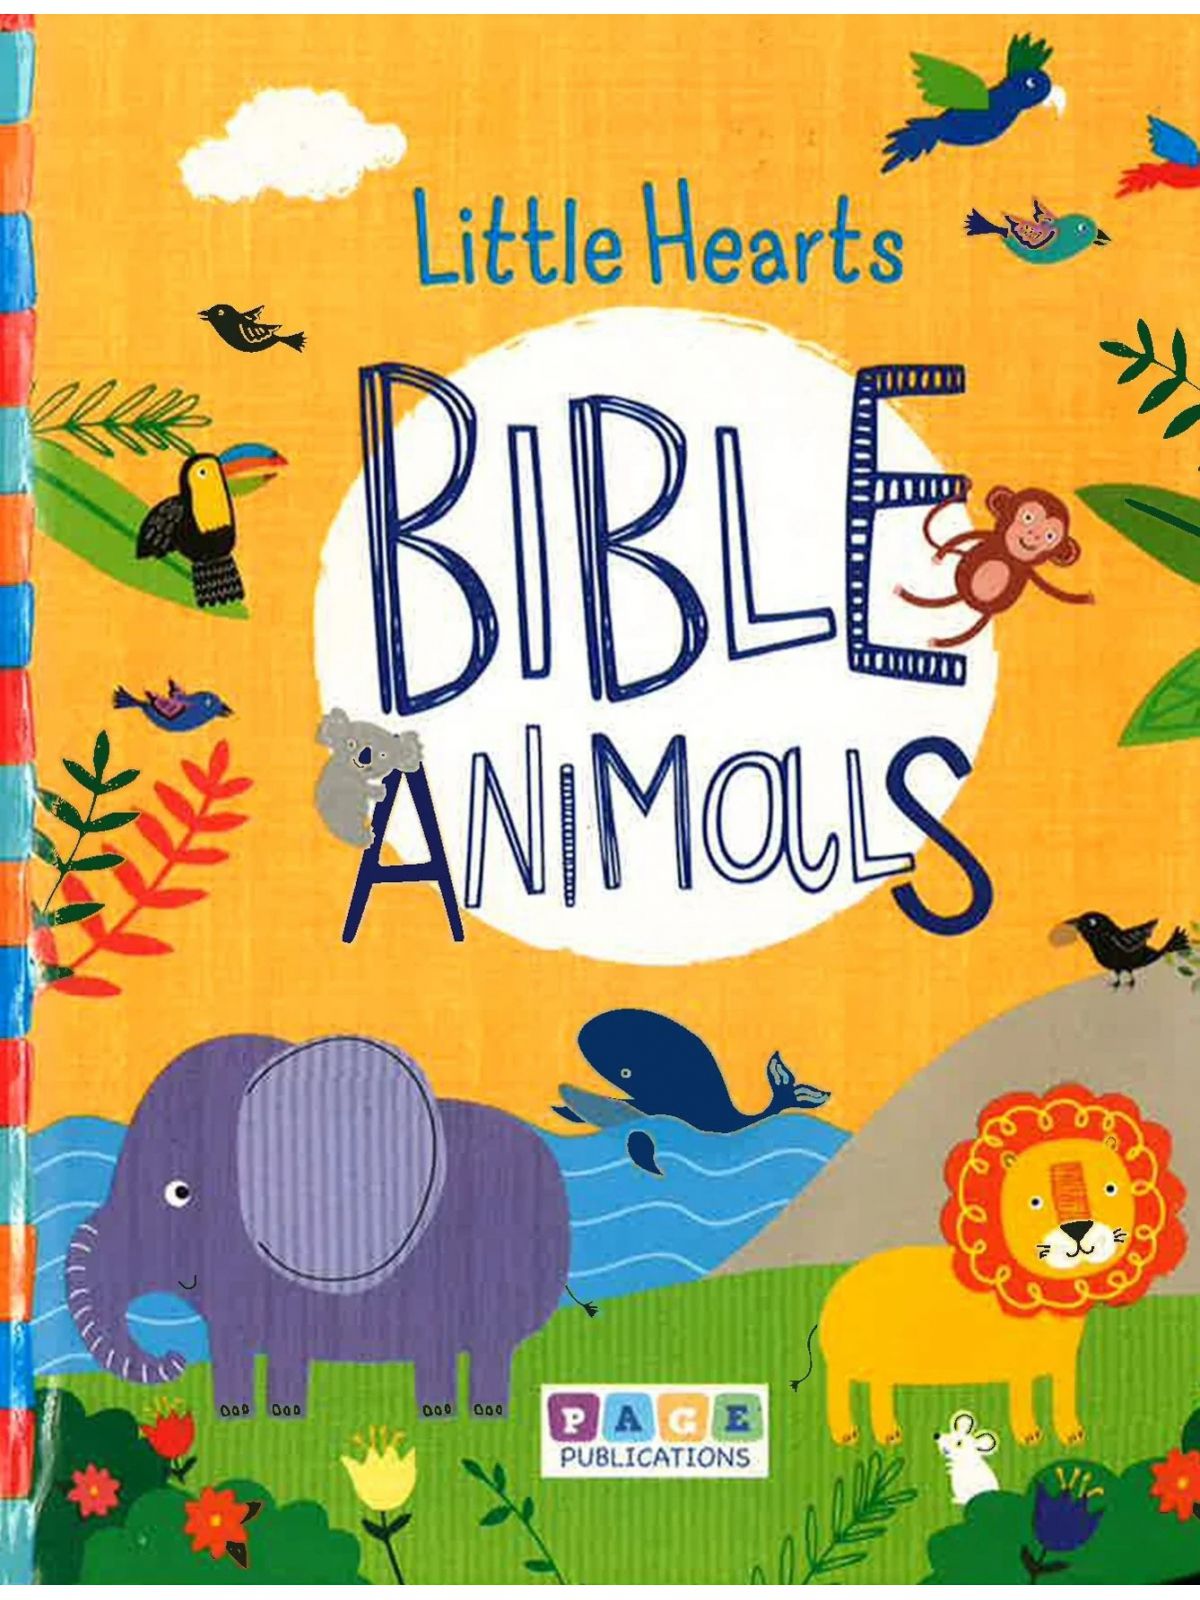 LITTLE HEARTS BIBLE ANIMALS  Купить Книгу на Английском